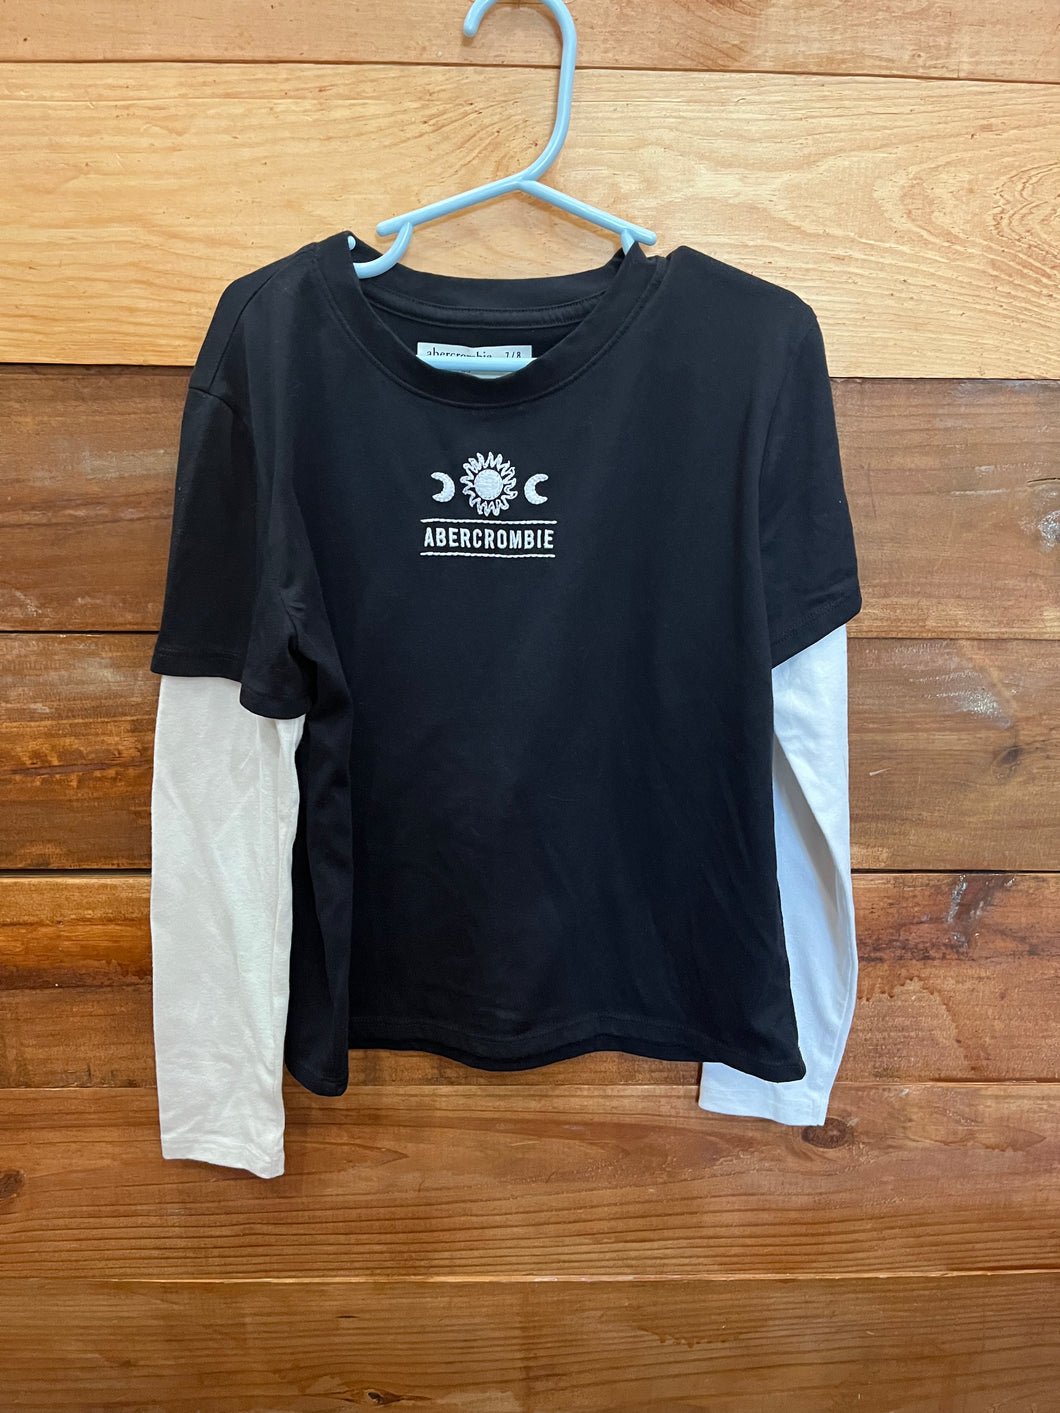 Abercrombie Black Sun Shirt Size 7/8